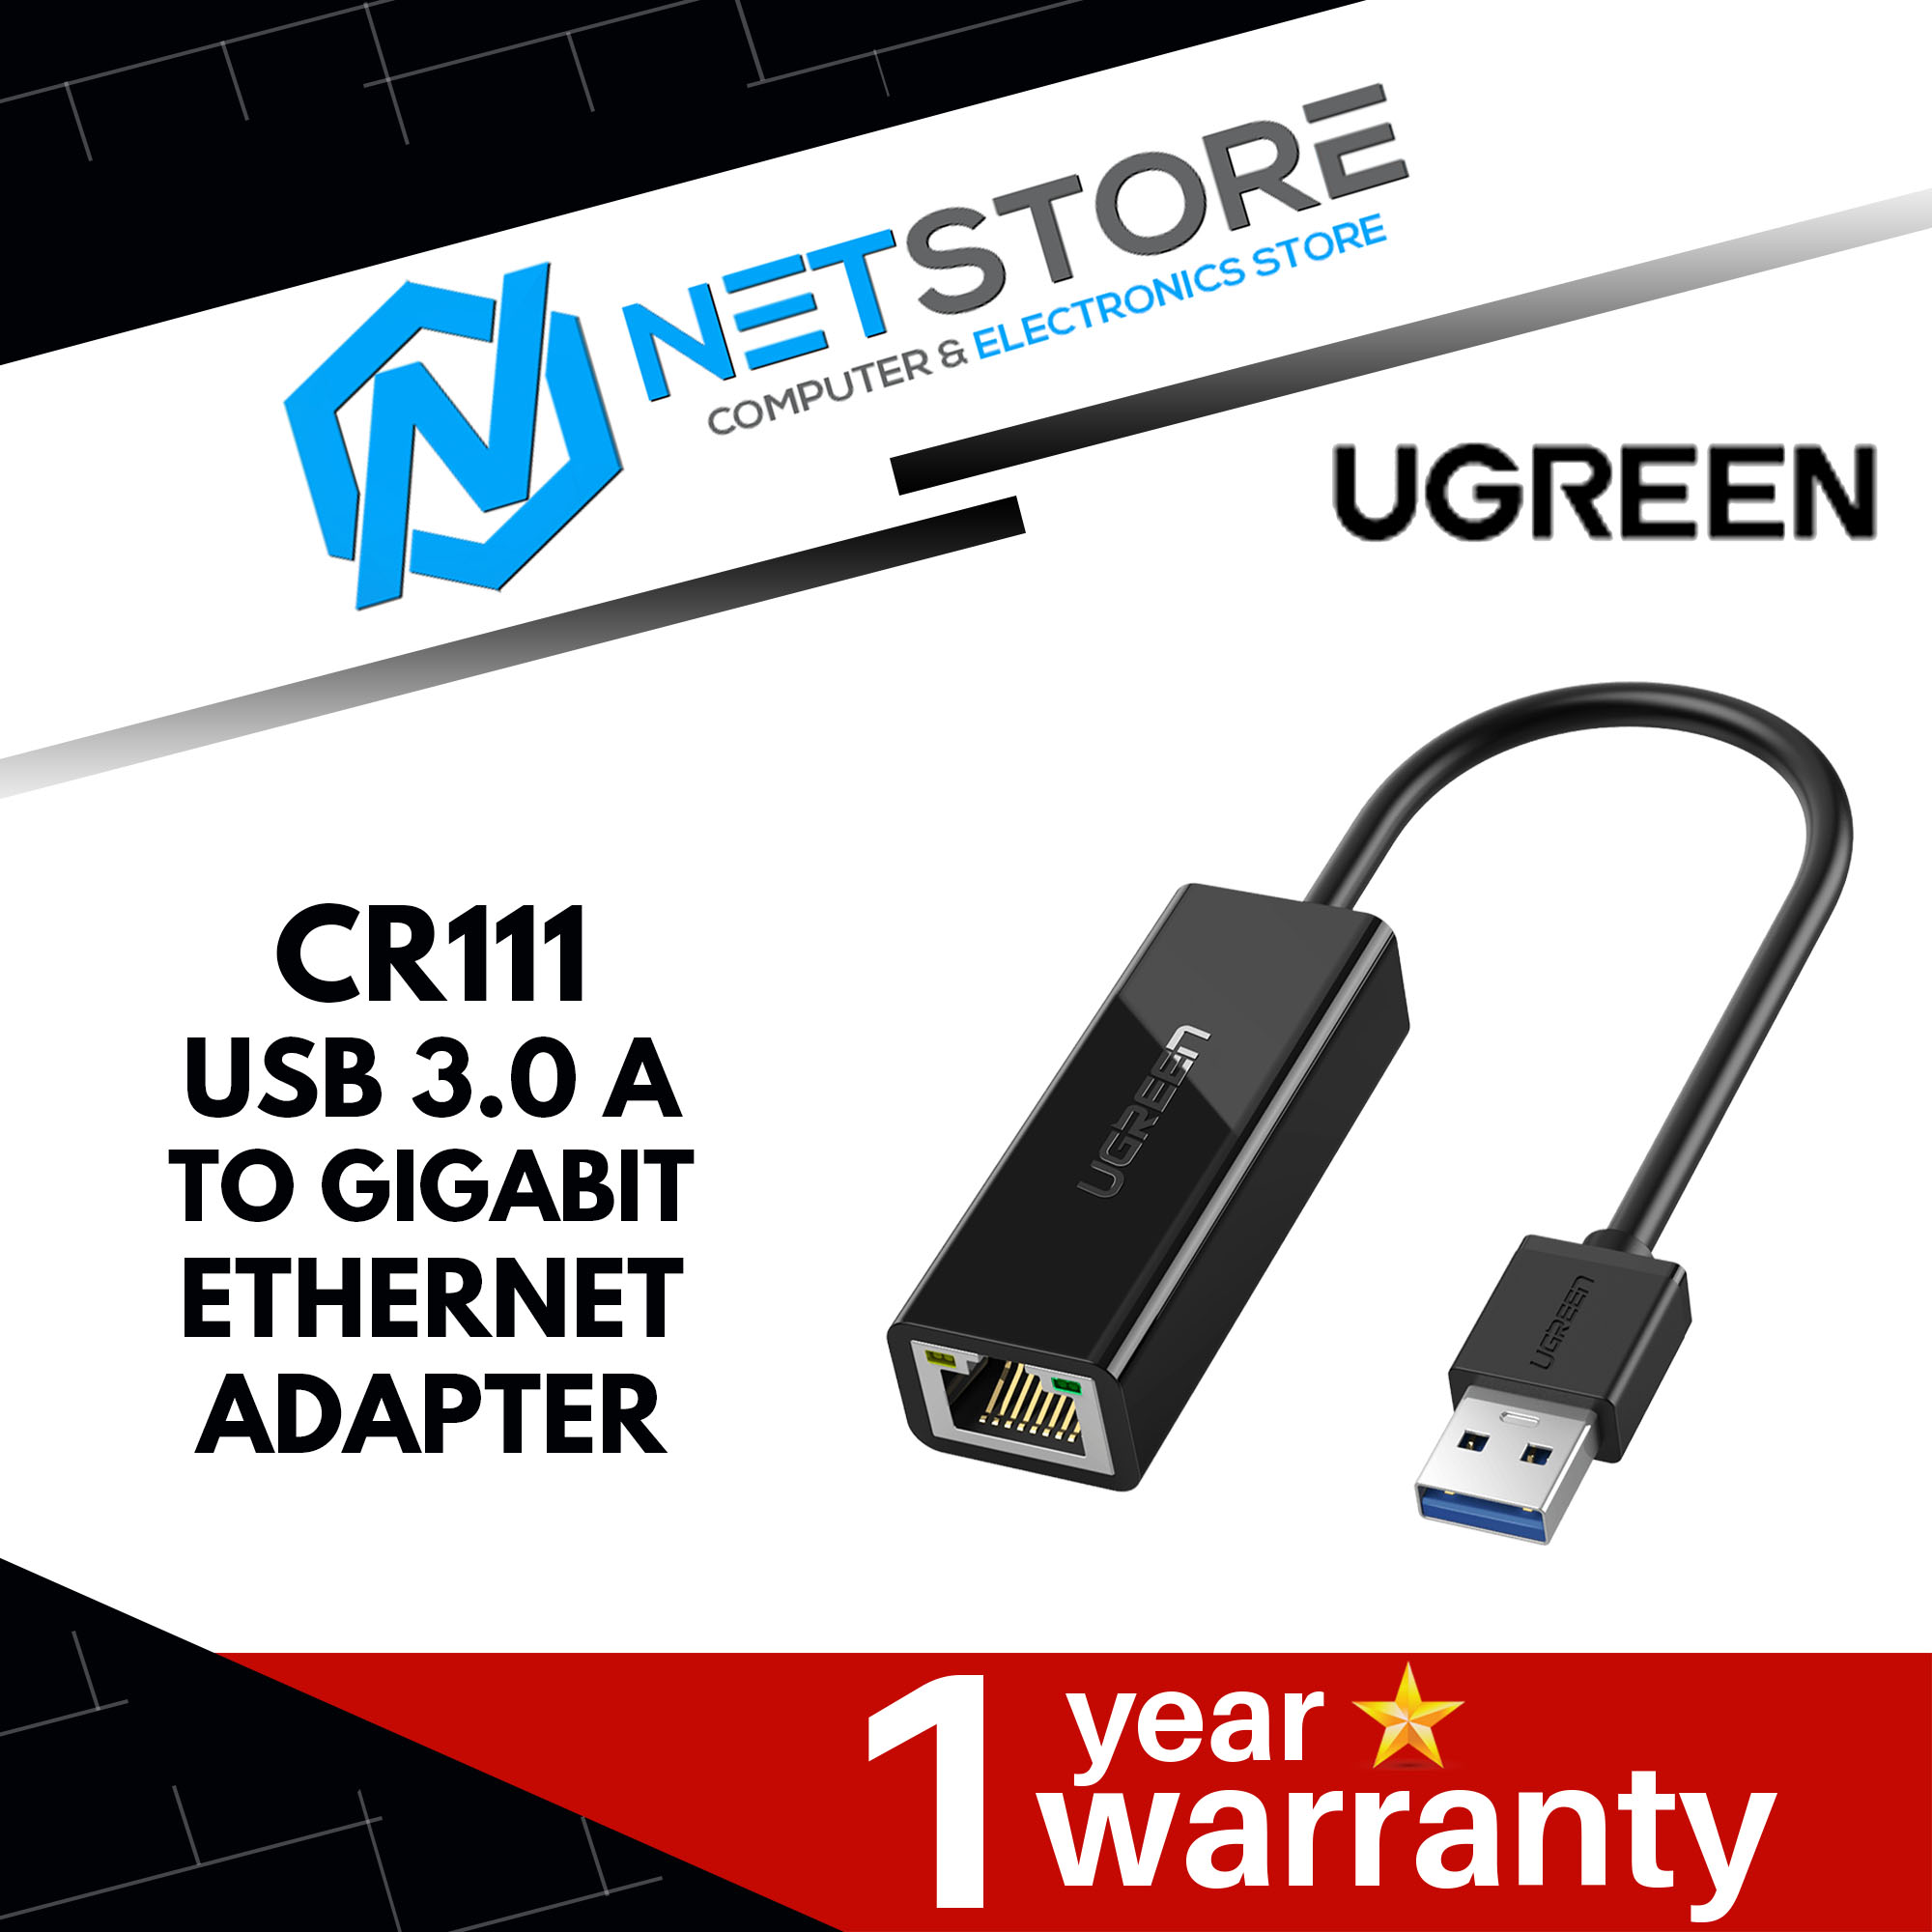 UGREEN CR111 USB 3.0 A TO GIGABIT ETHERNET ADAPTER - UG-20256